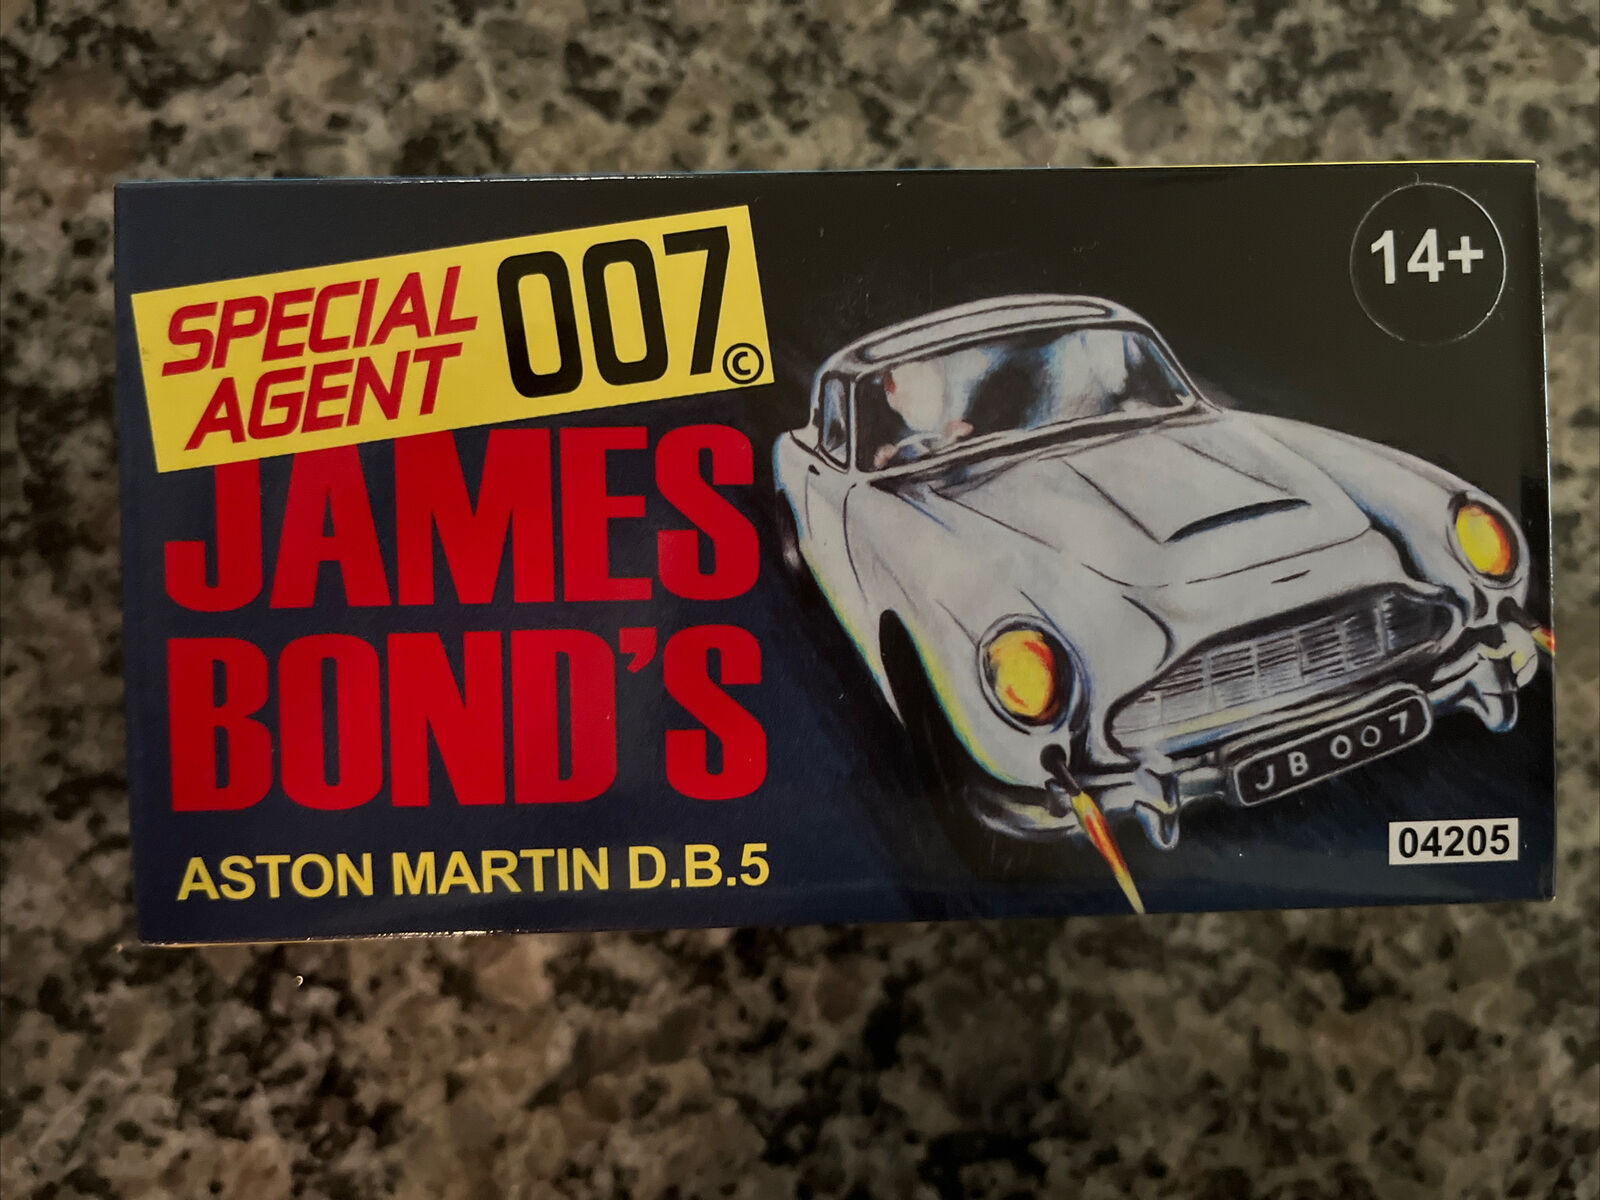 2014 CORGI TOYS SPECIAL AGENT 007 JAMES BOND'S ASTON MARTIN